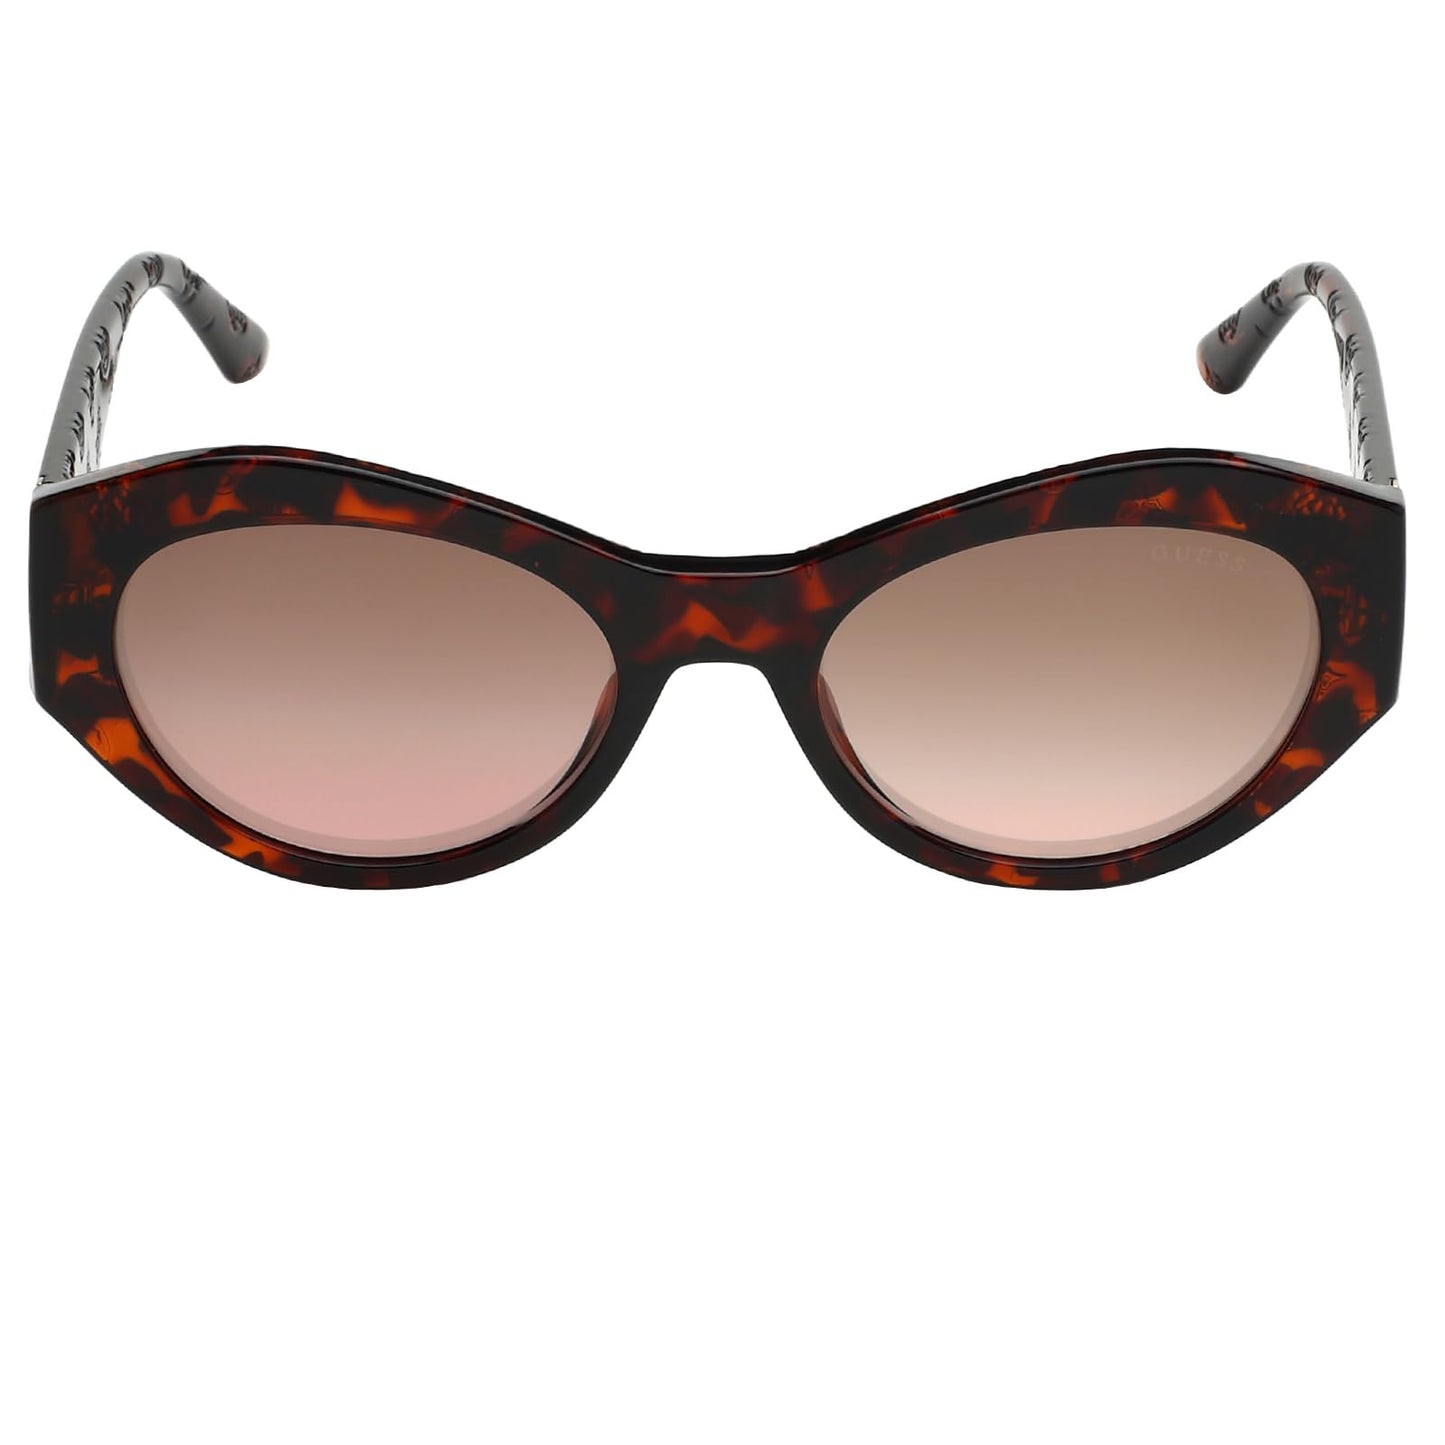 GUESS Gradient Oval Women Sunglasses -(GU7728 52G 52 S |52| Brown Color Lens)